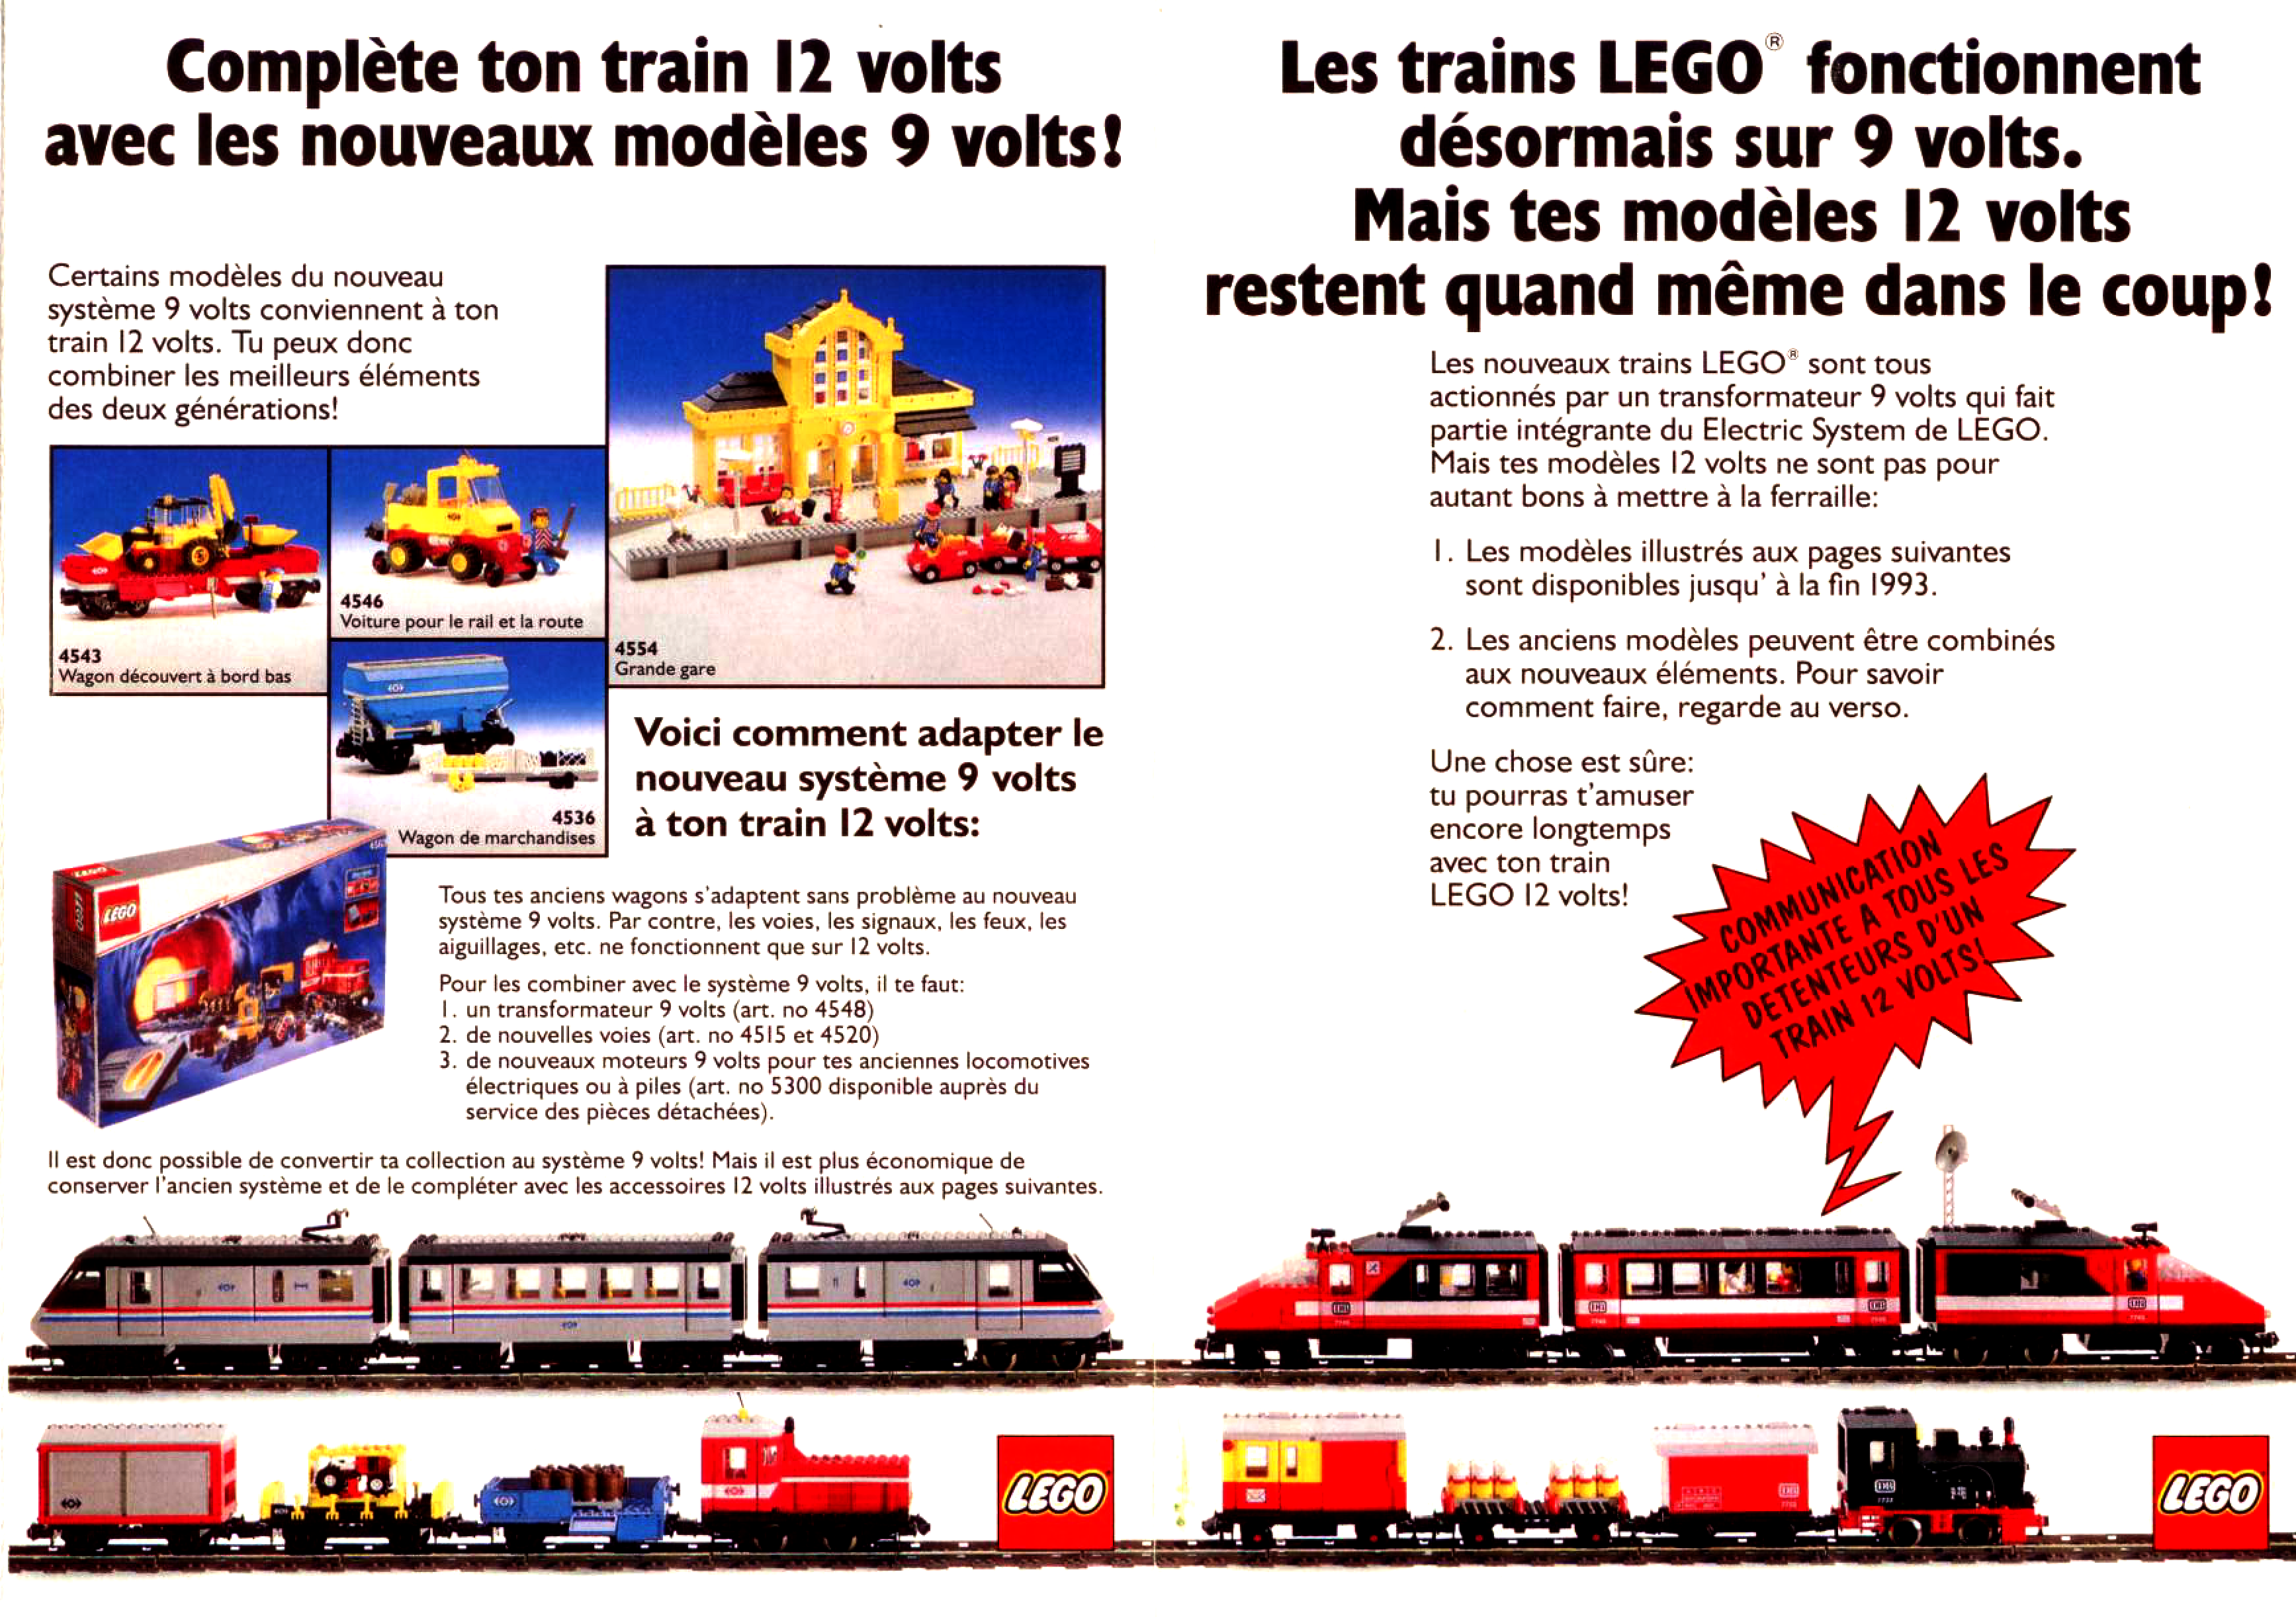 Lego 7745 Electric Inter-City Train set